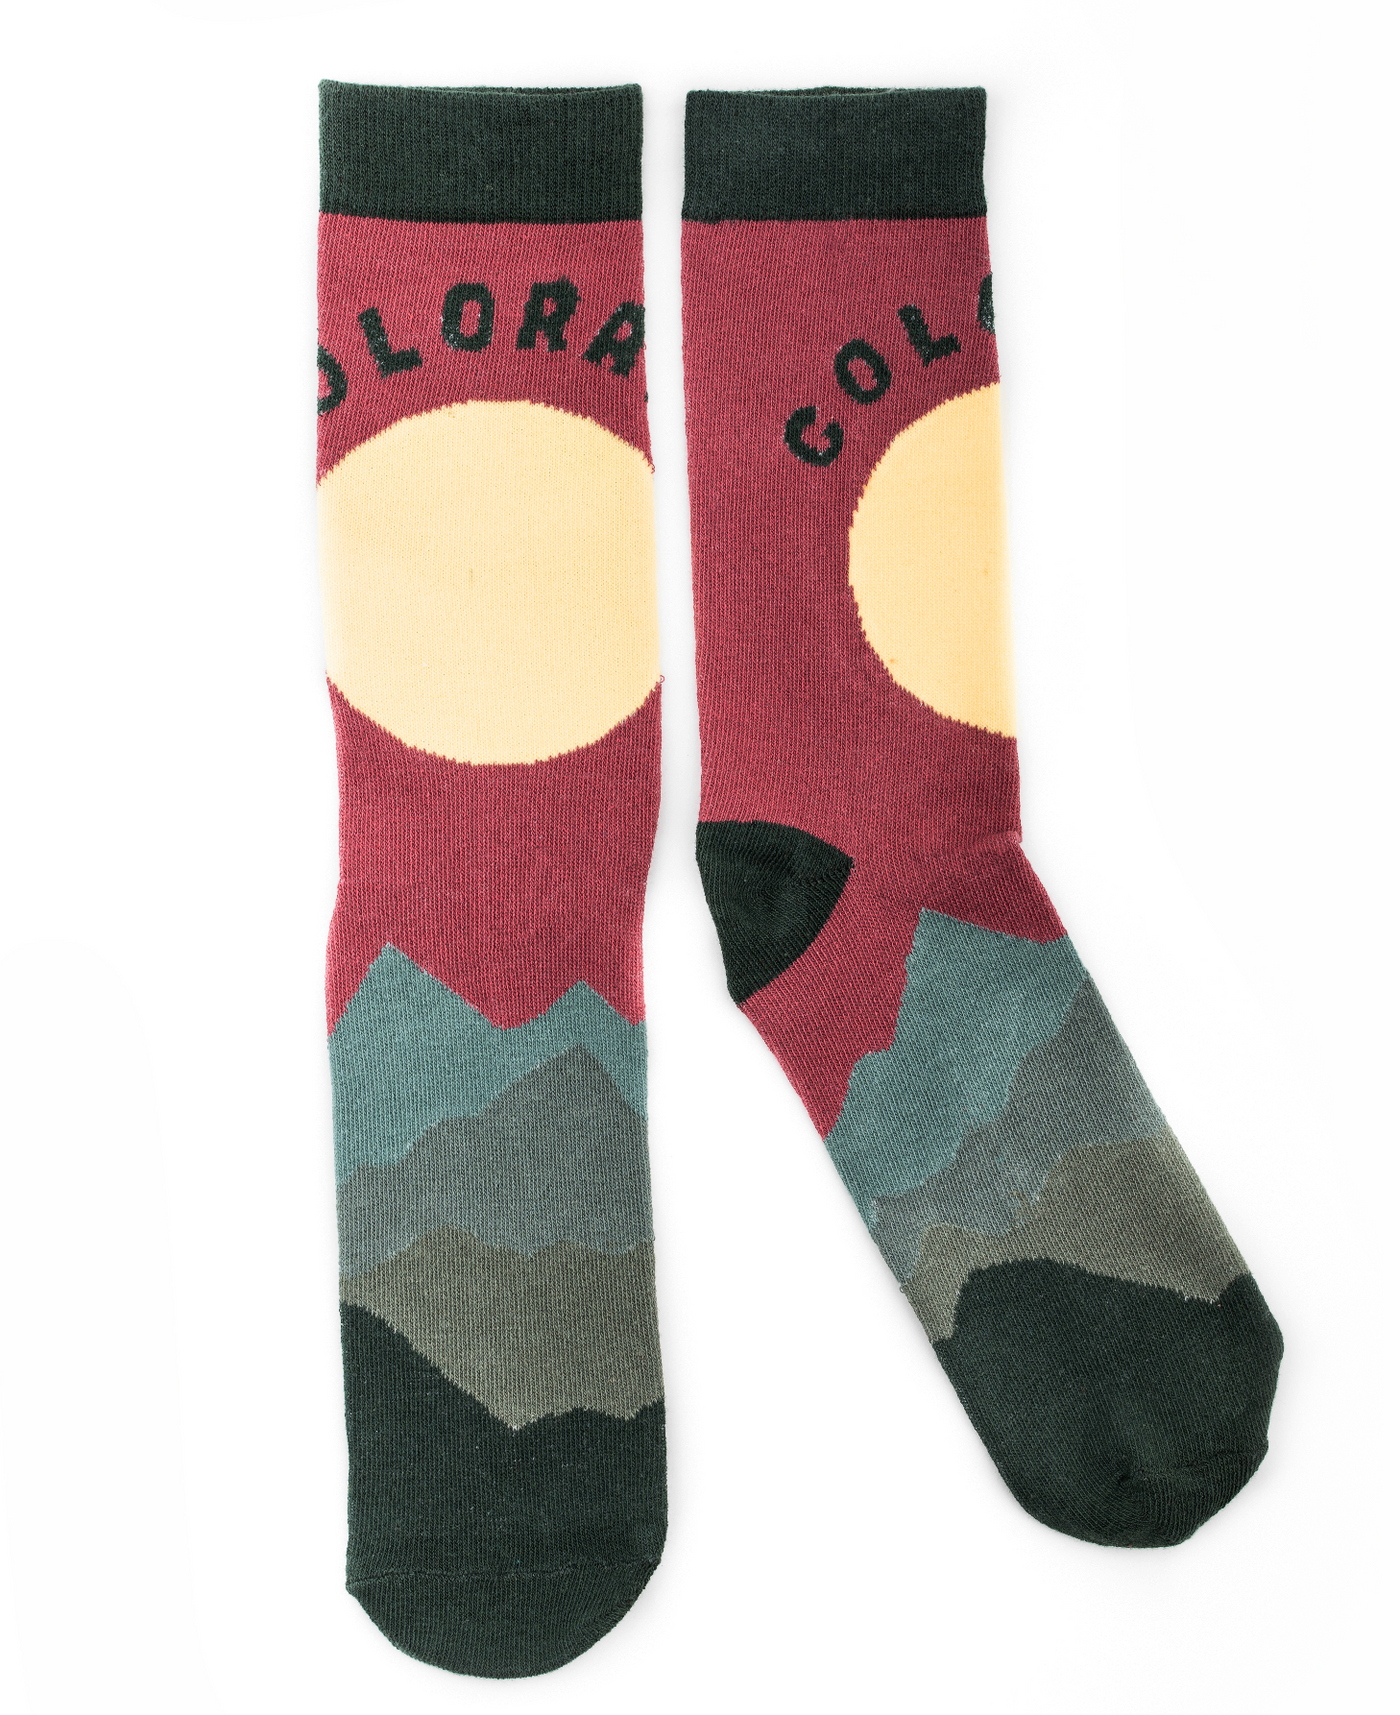 Colorado Red Sunset Socks